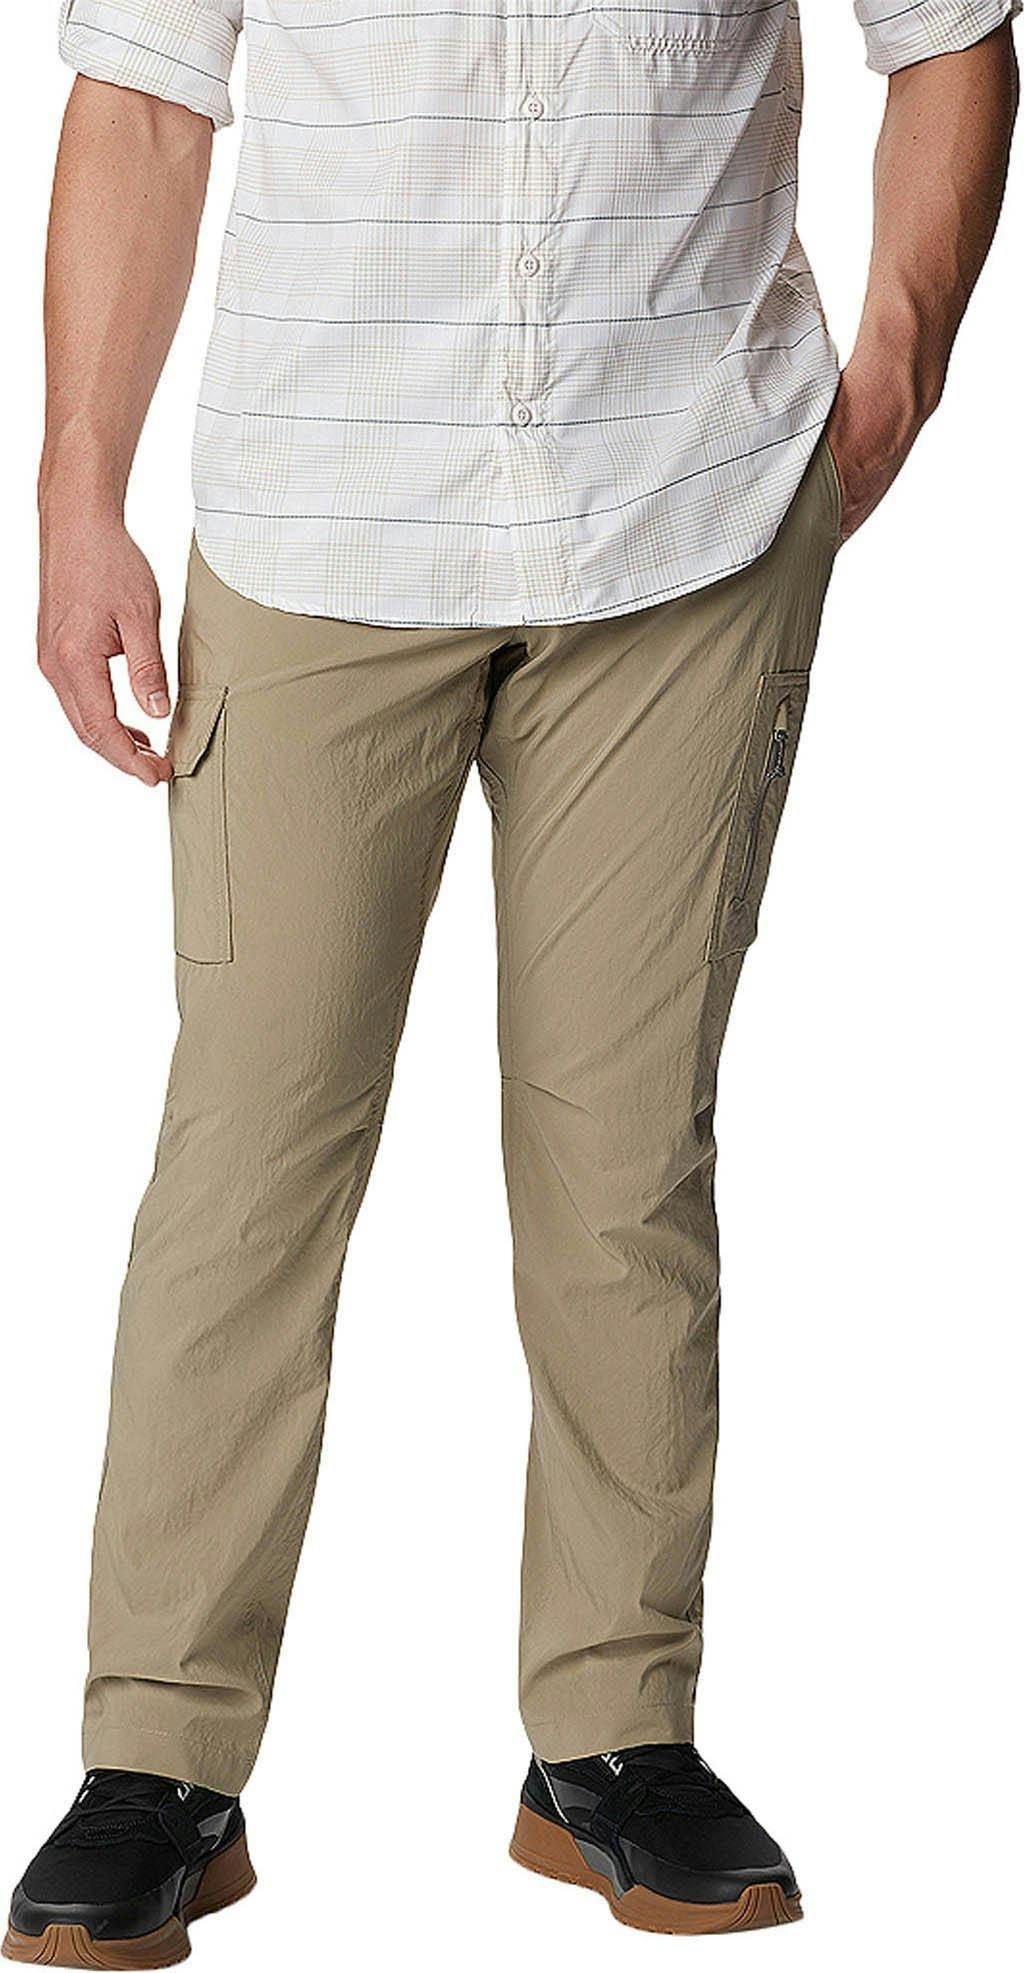 Product image for Silver Ridge™ Utility Pants - Men's